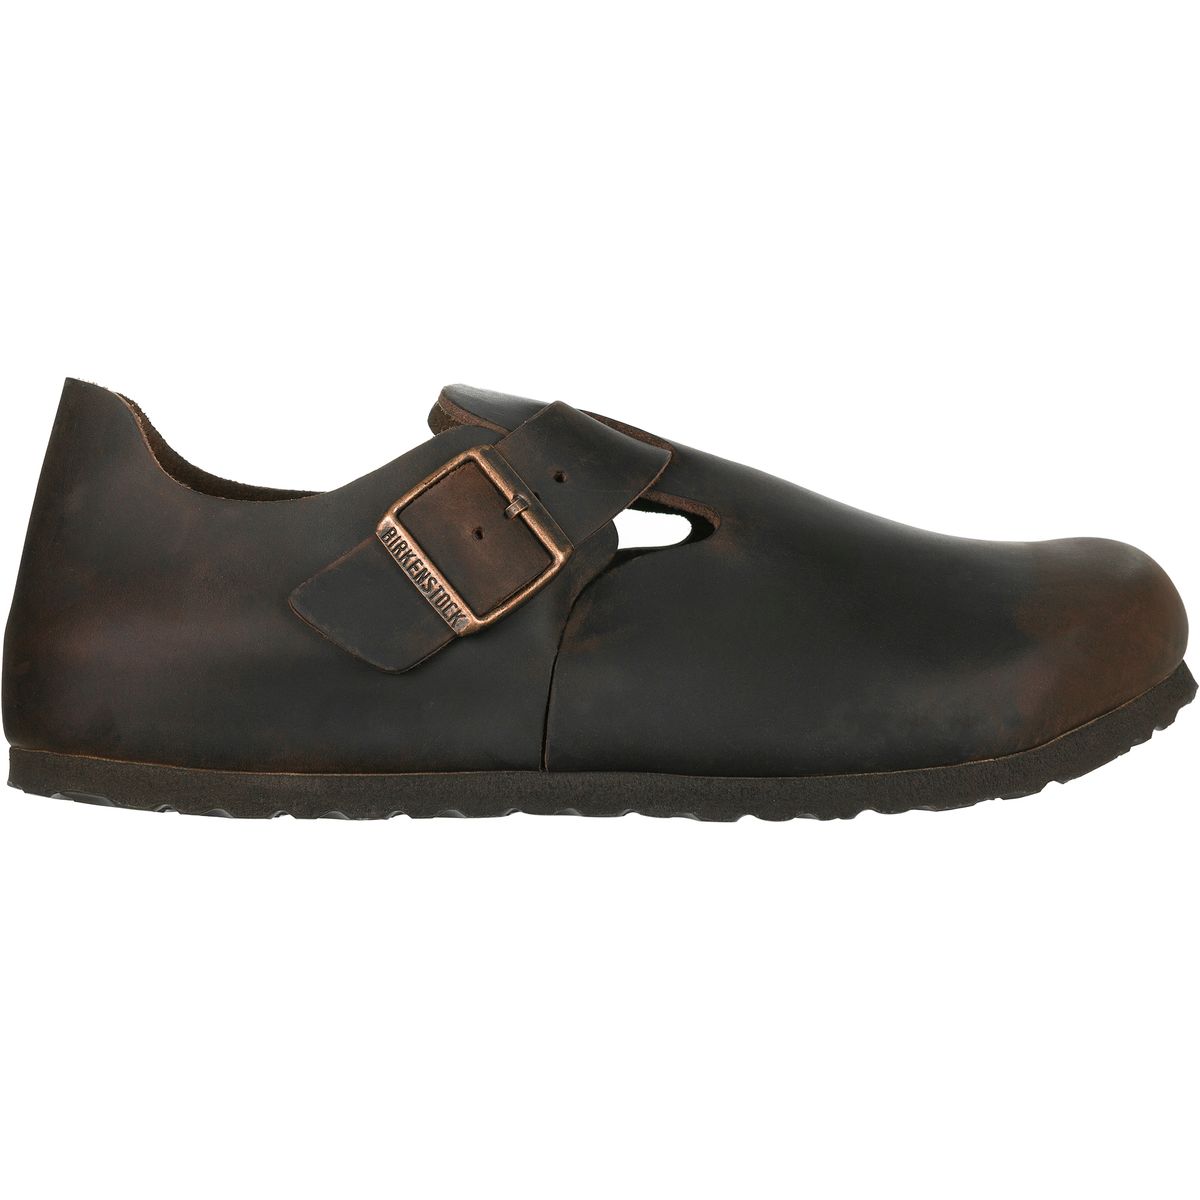 London Leather Shoe - Men